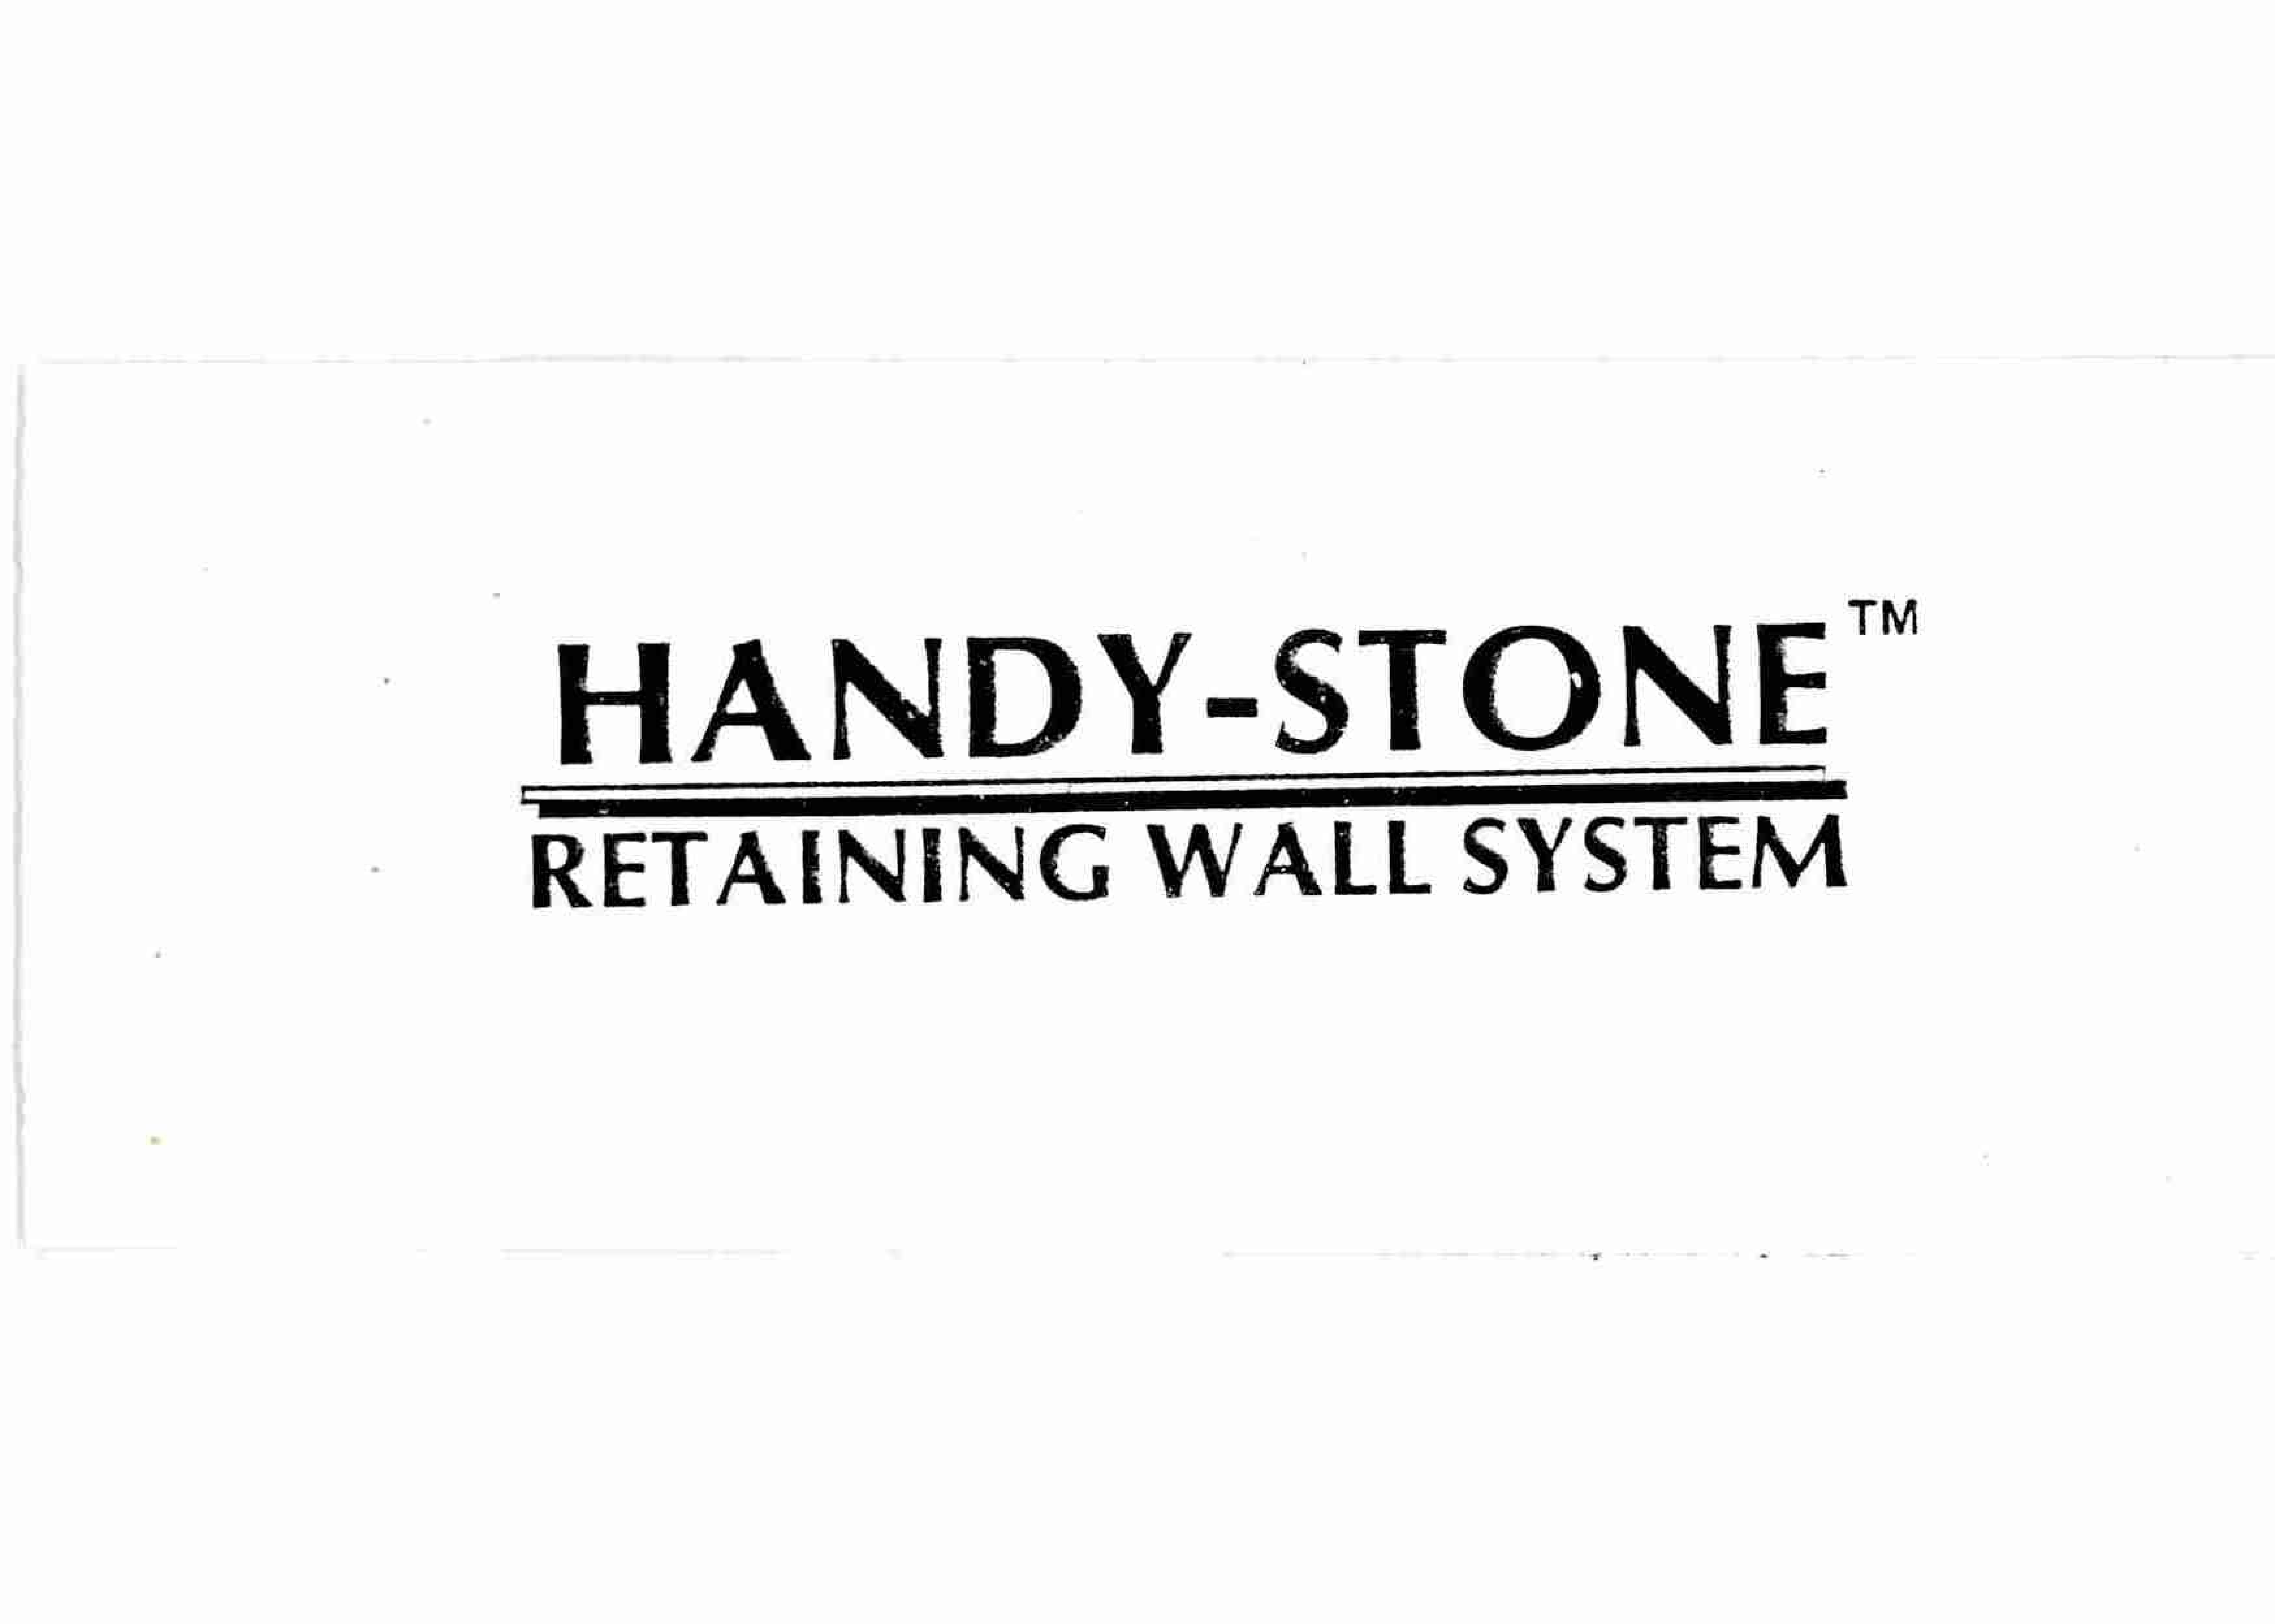  HANDY-STONE